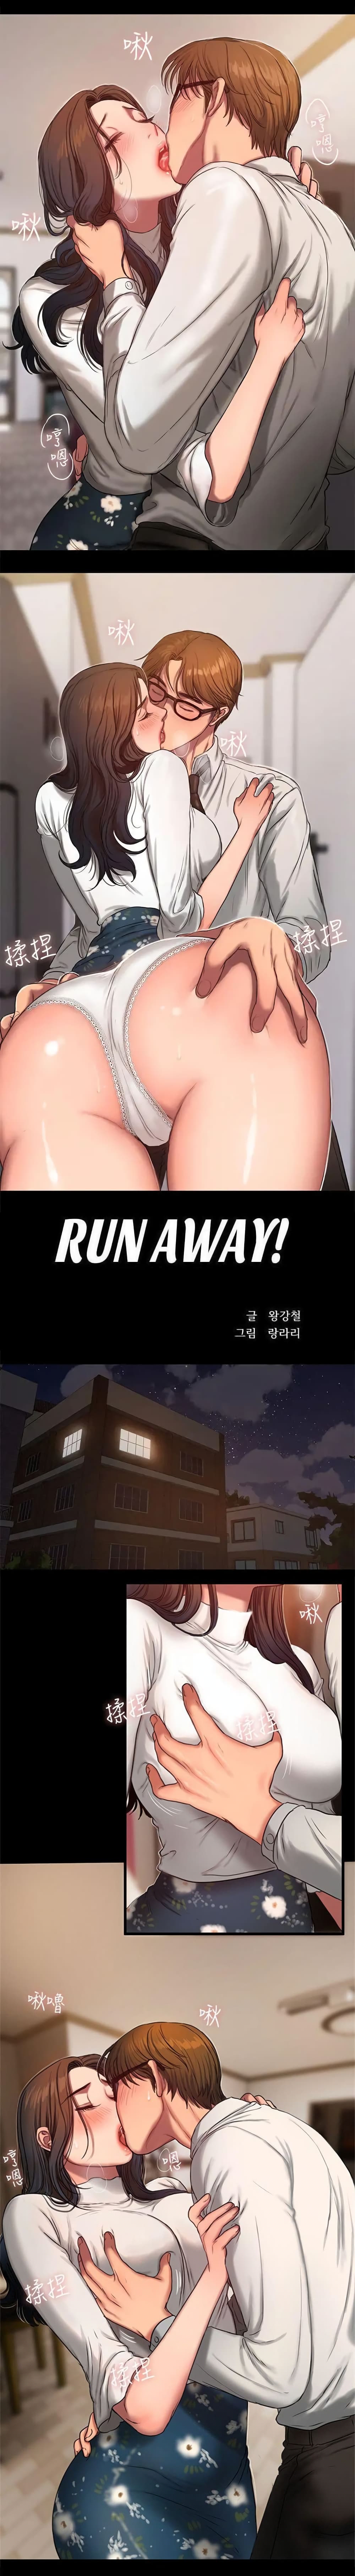 Run away 14 (1)